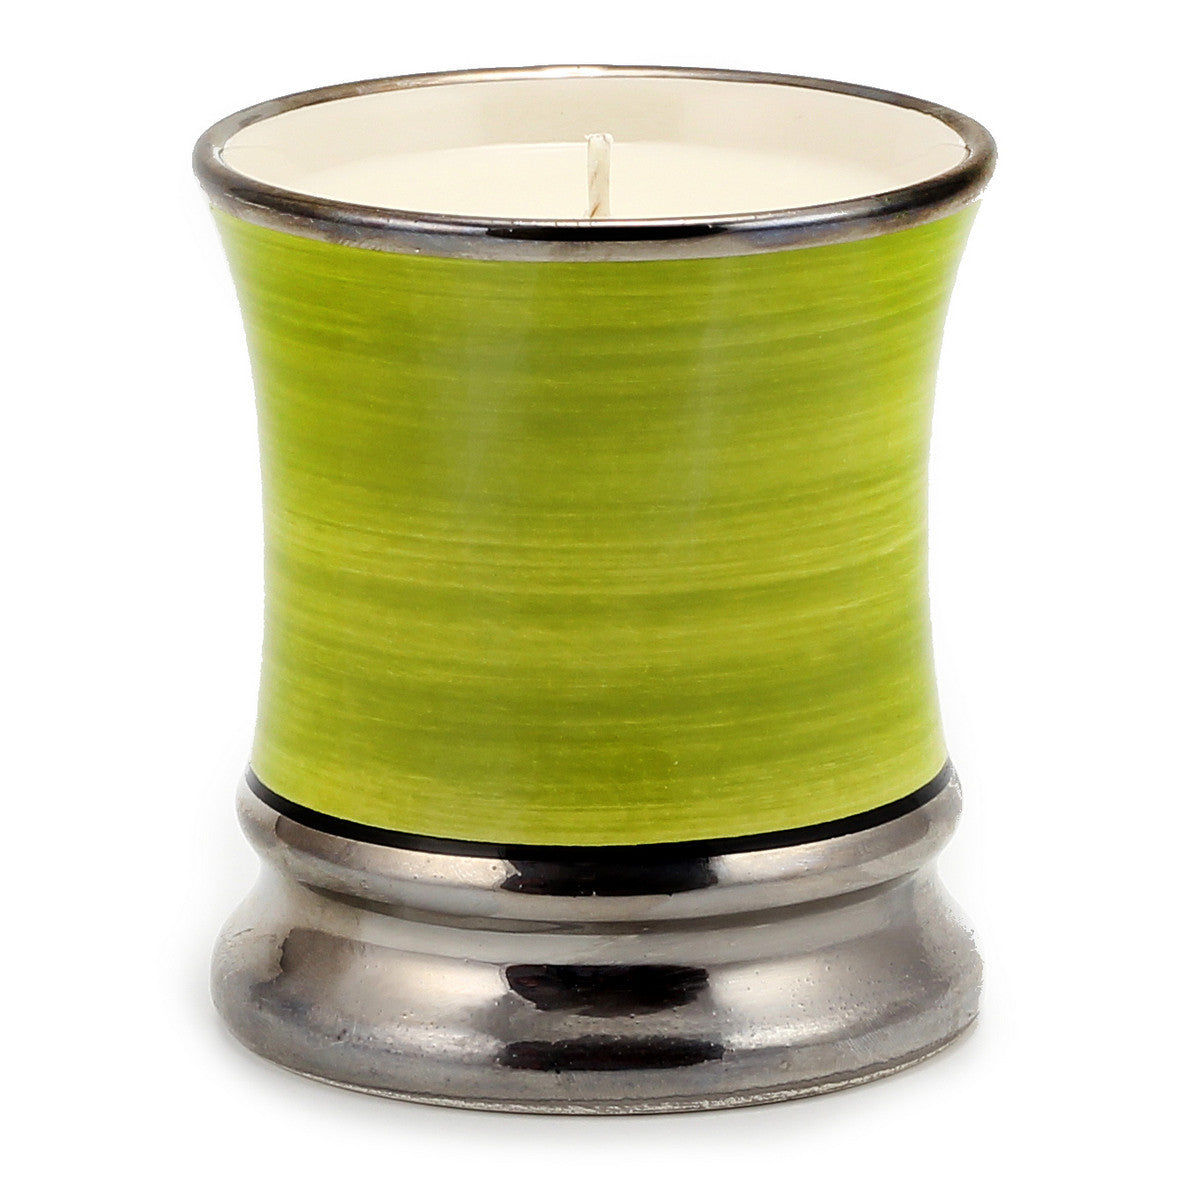 DERUTA CANDLES: Italian BASIL Scented Candle - Deluxe Precious Cup Coloris Green Design with Pure Platinum Rim (10 Oz) - Artistica.com